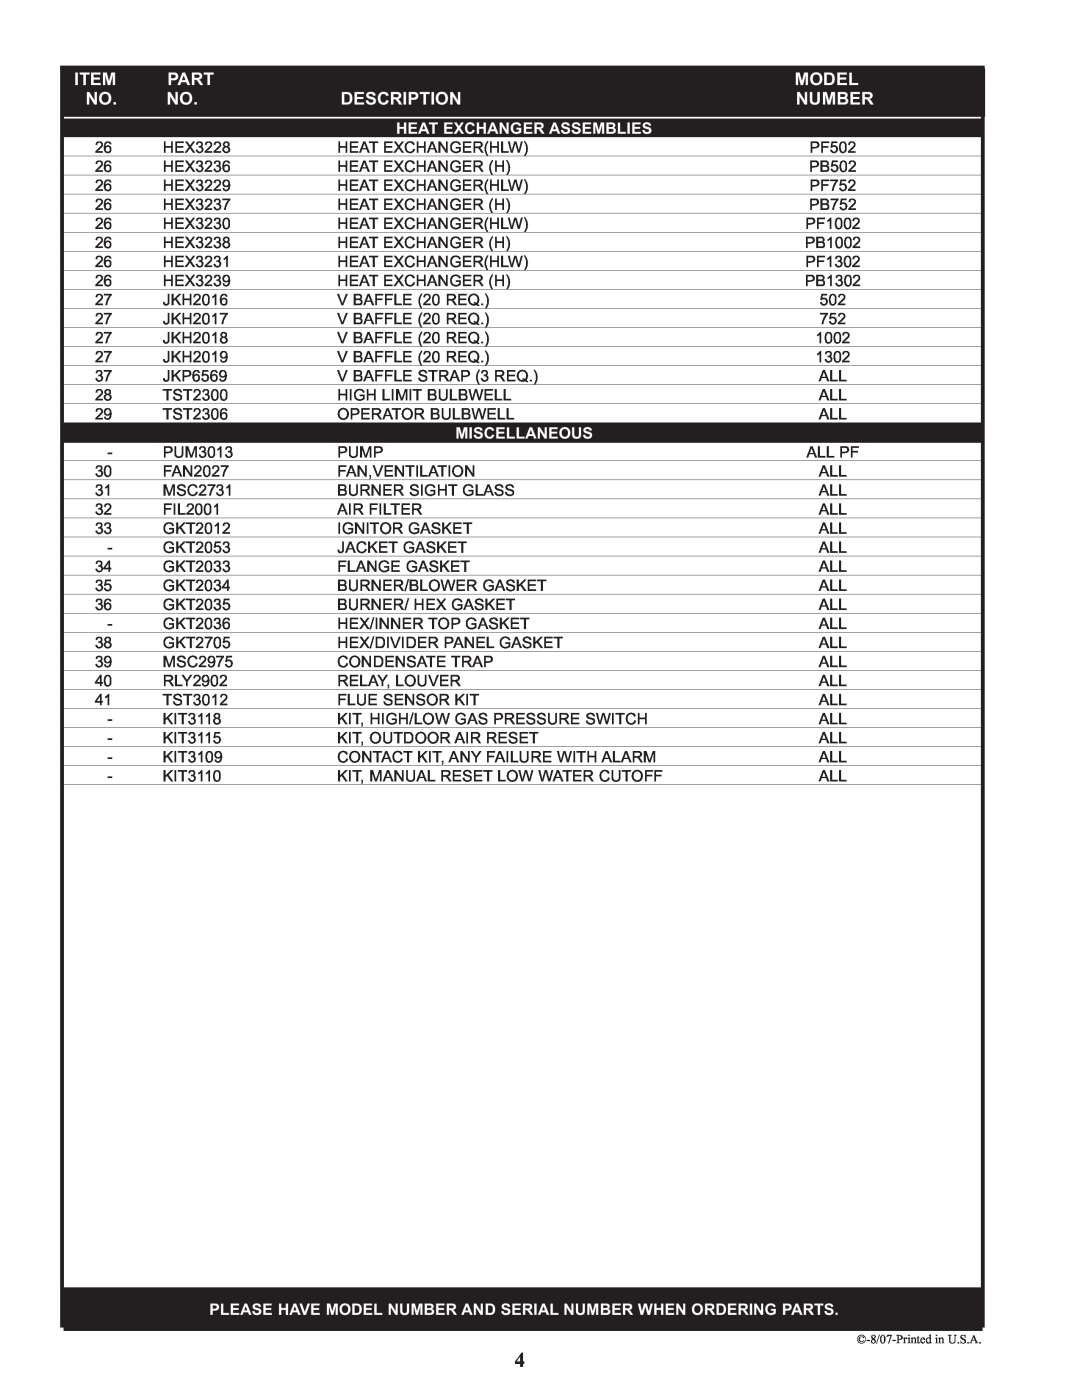 Lochinvar PB/PF 502 THRU 1302 manual Heat Exchanger Assemblies, Miscellaneous, Part, Model, Description, Number 